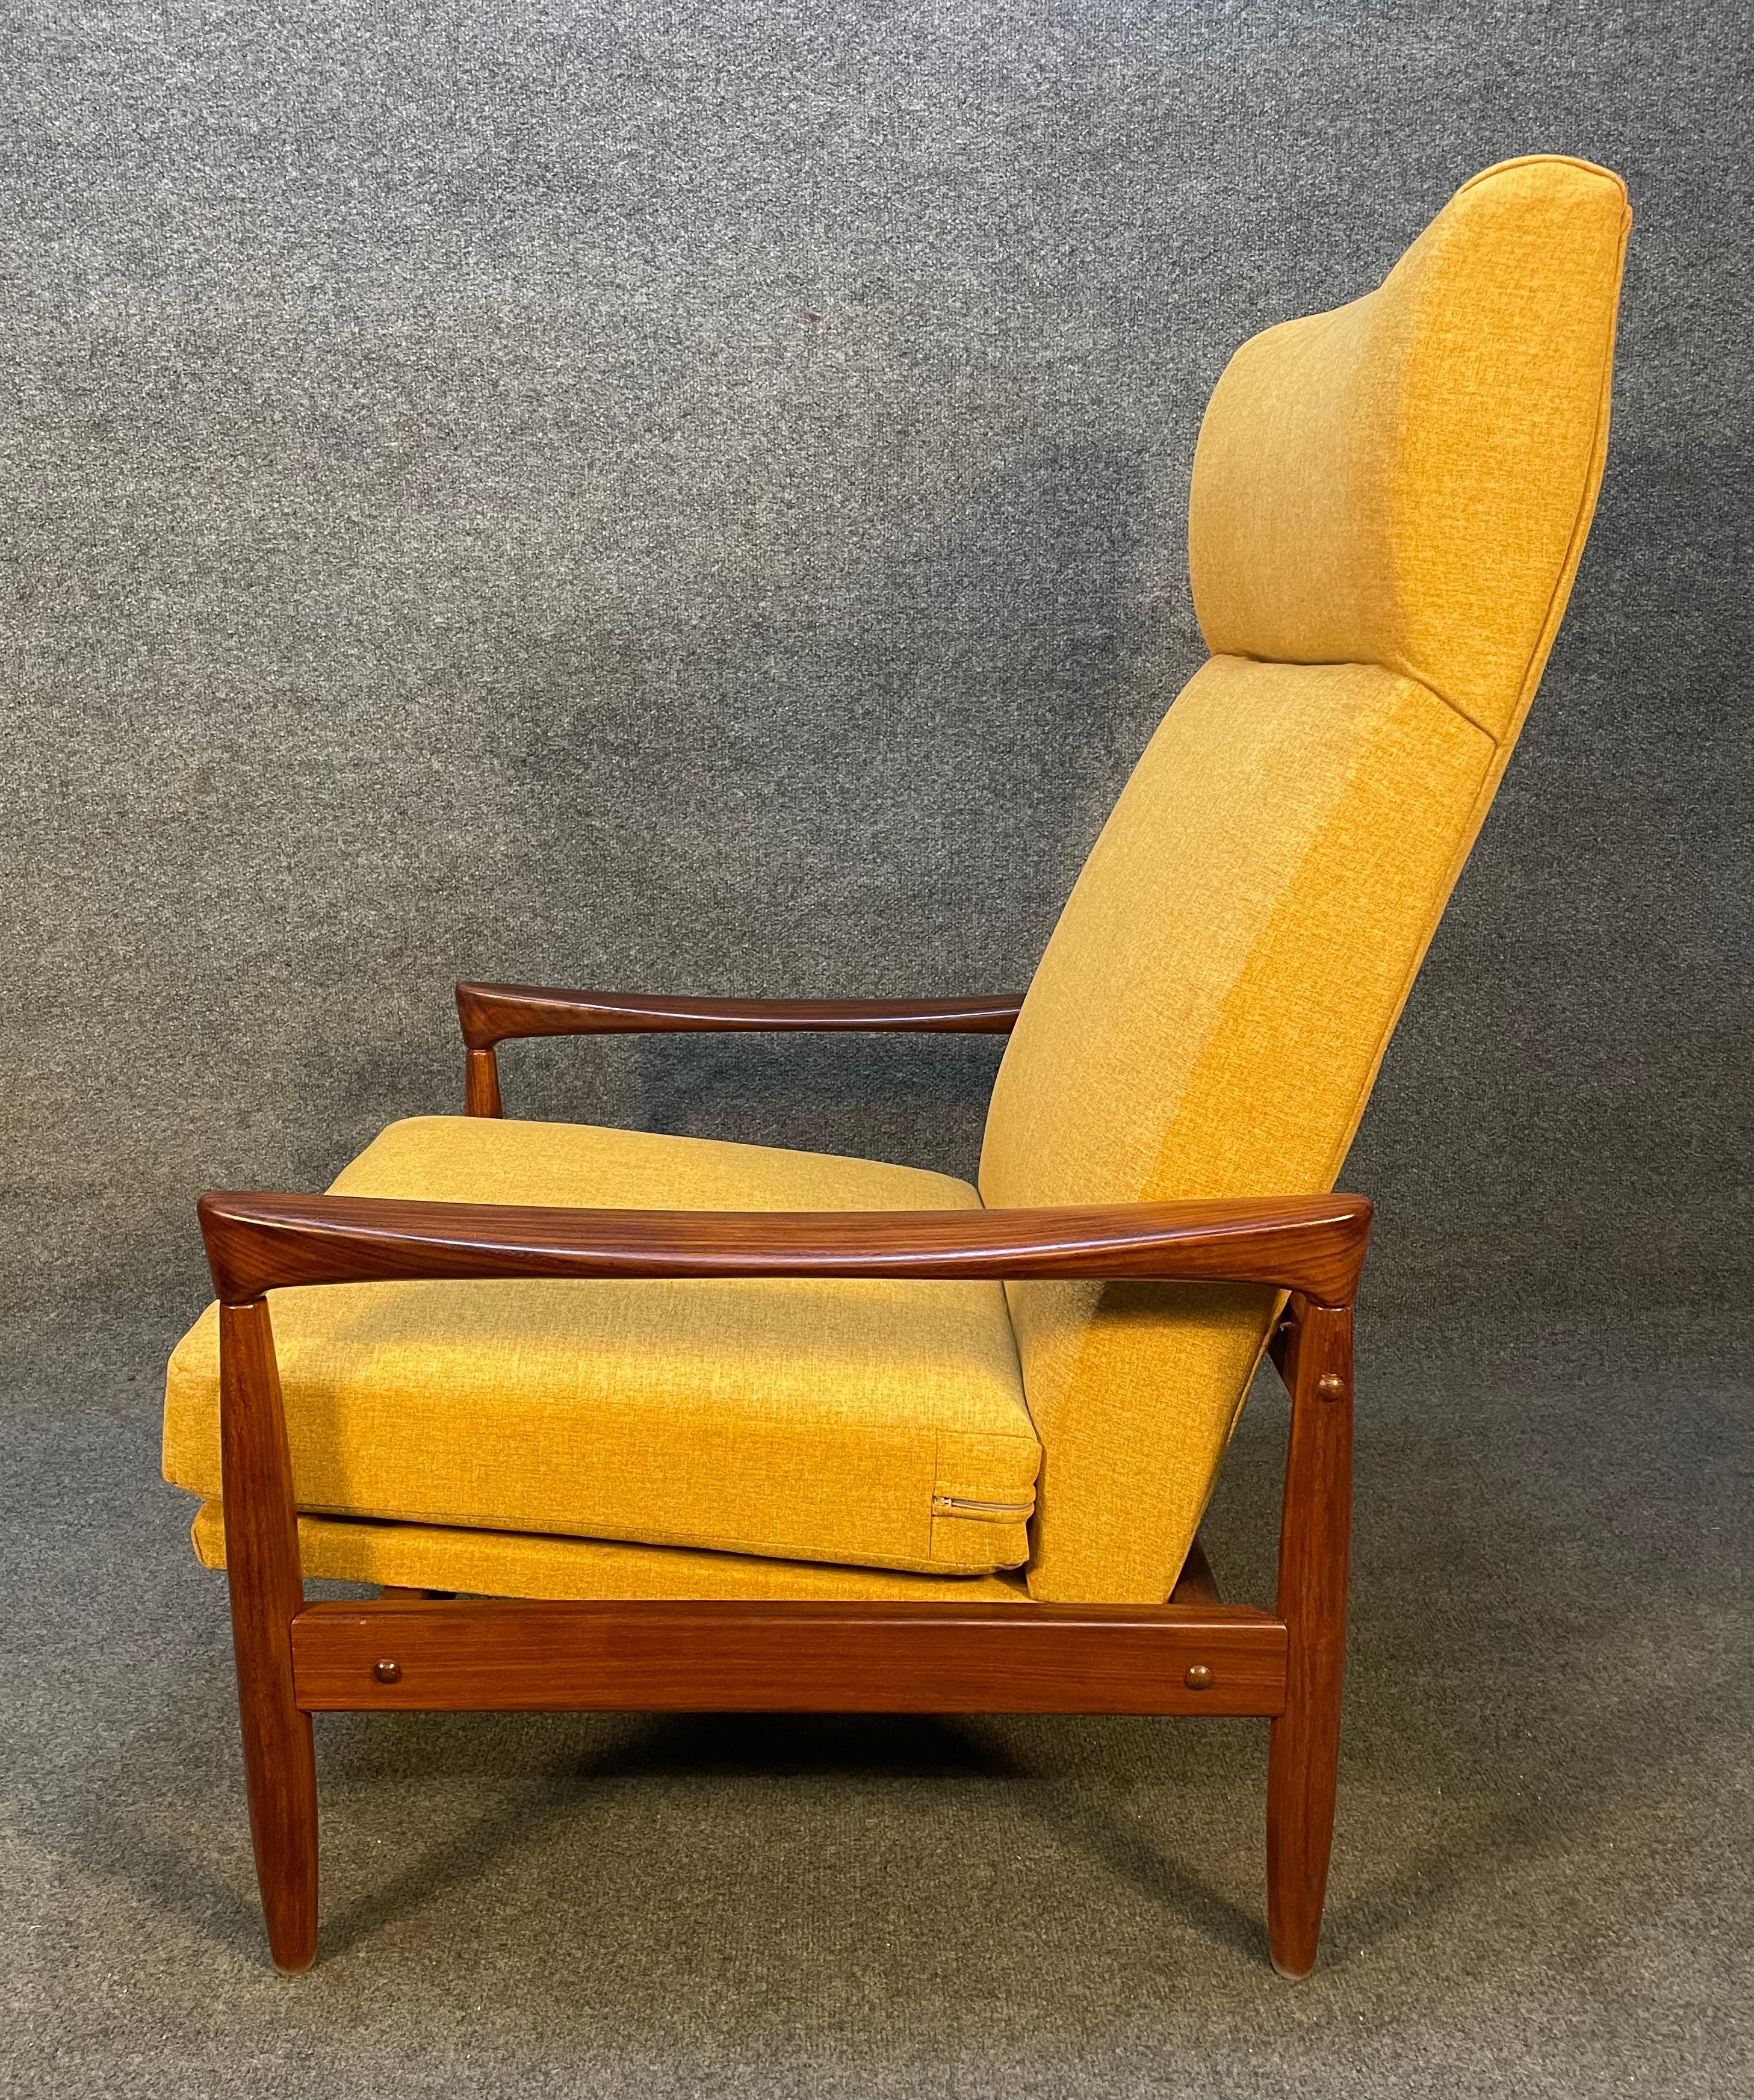 Here is a beautiful Scandinavian modern high back easy chair model 